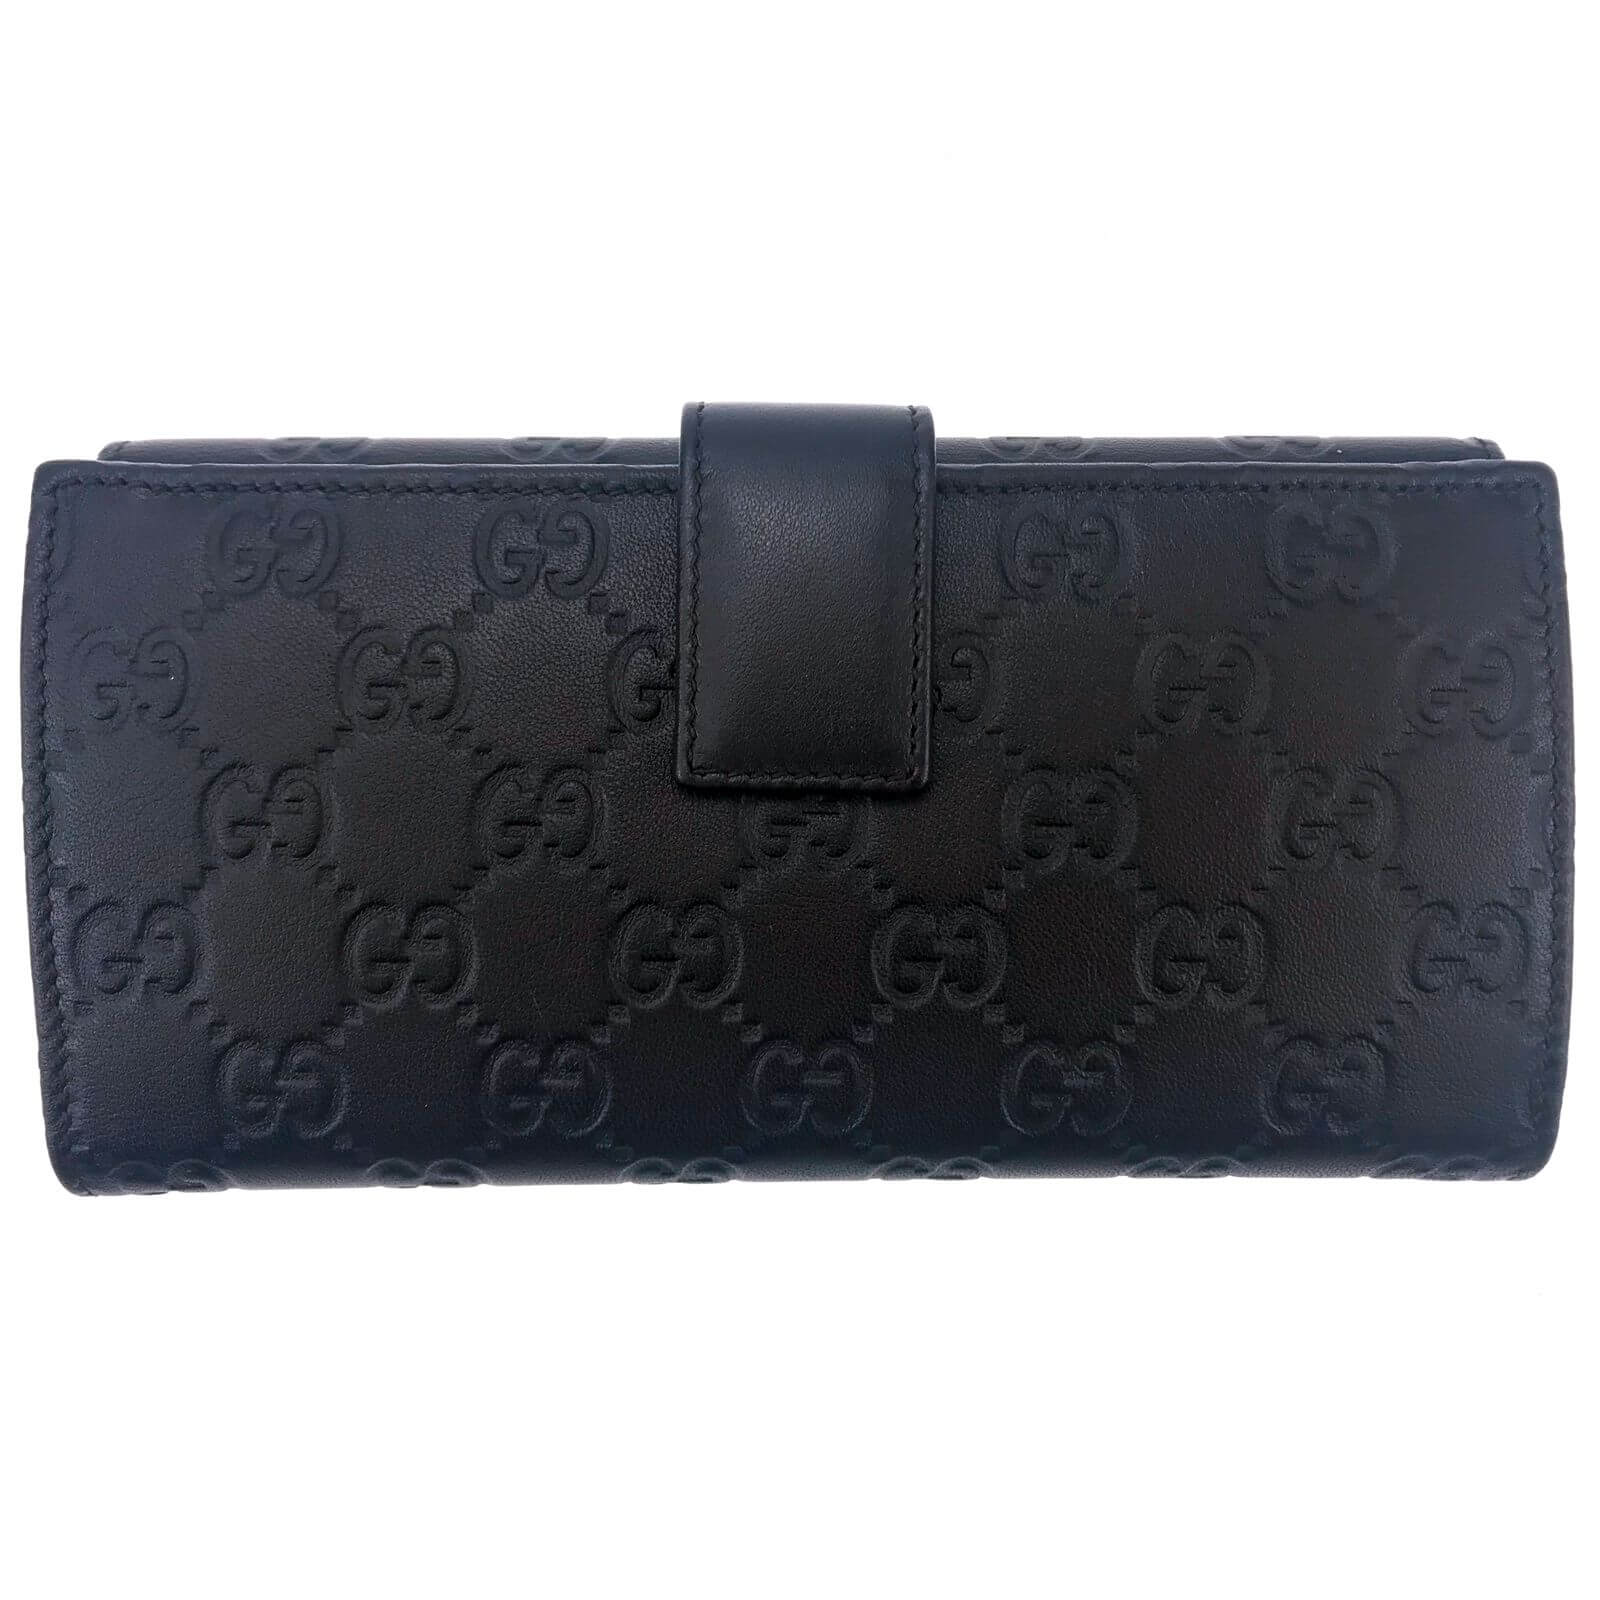 gucci women's black leather wallet